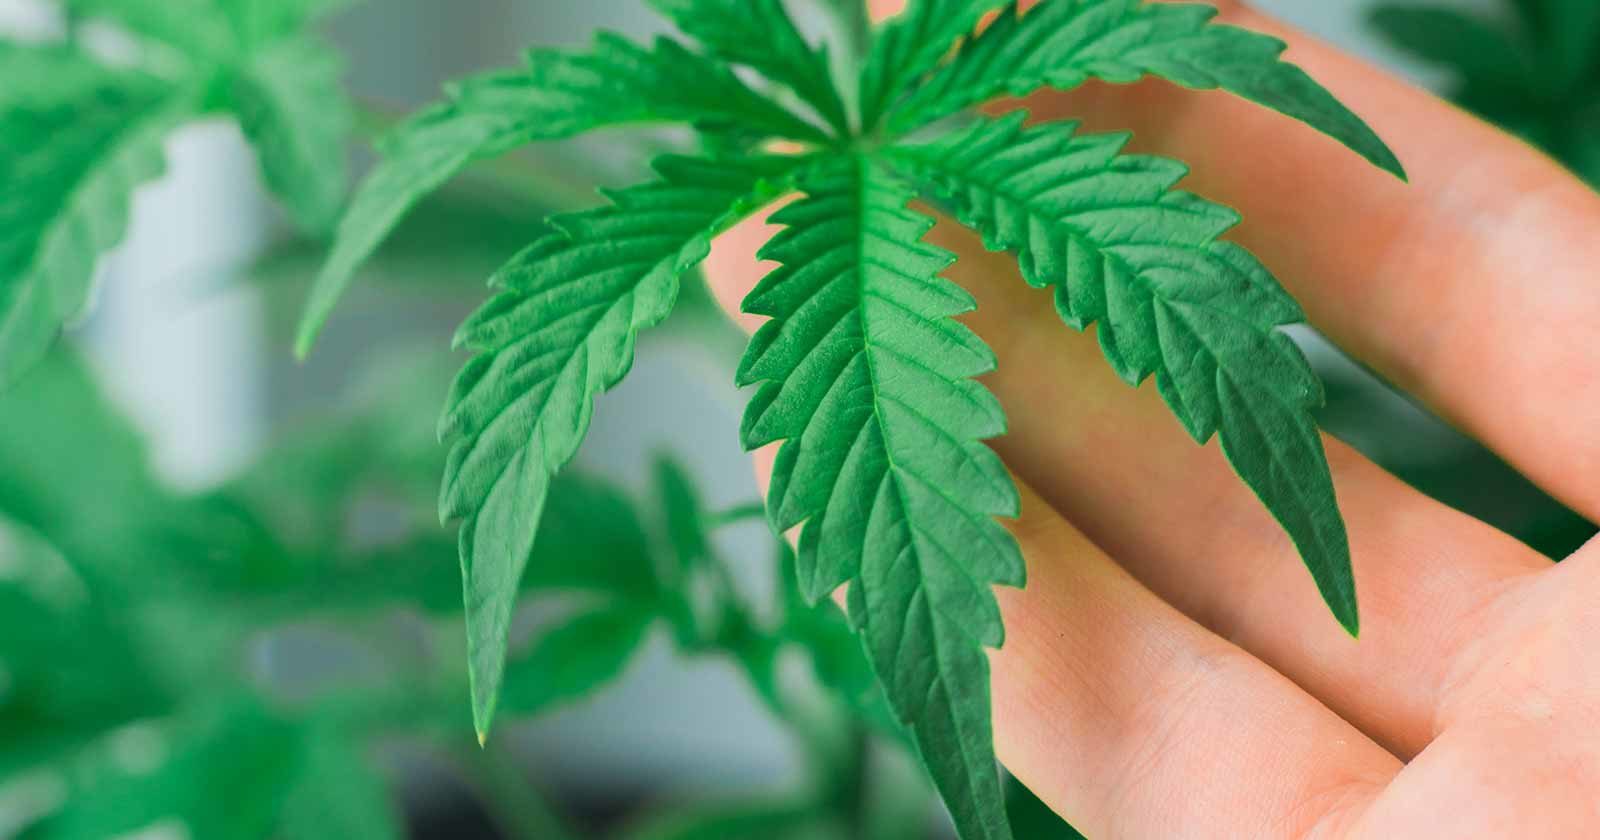 will legalizing marijuana curb fentanyl overdoses